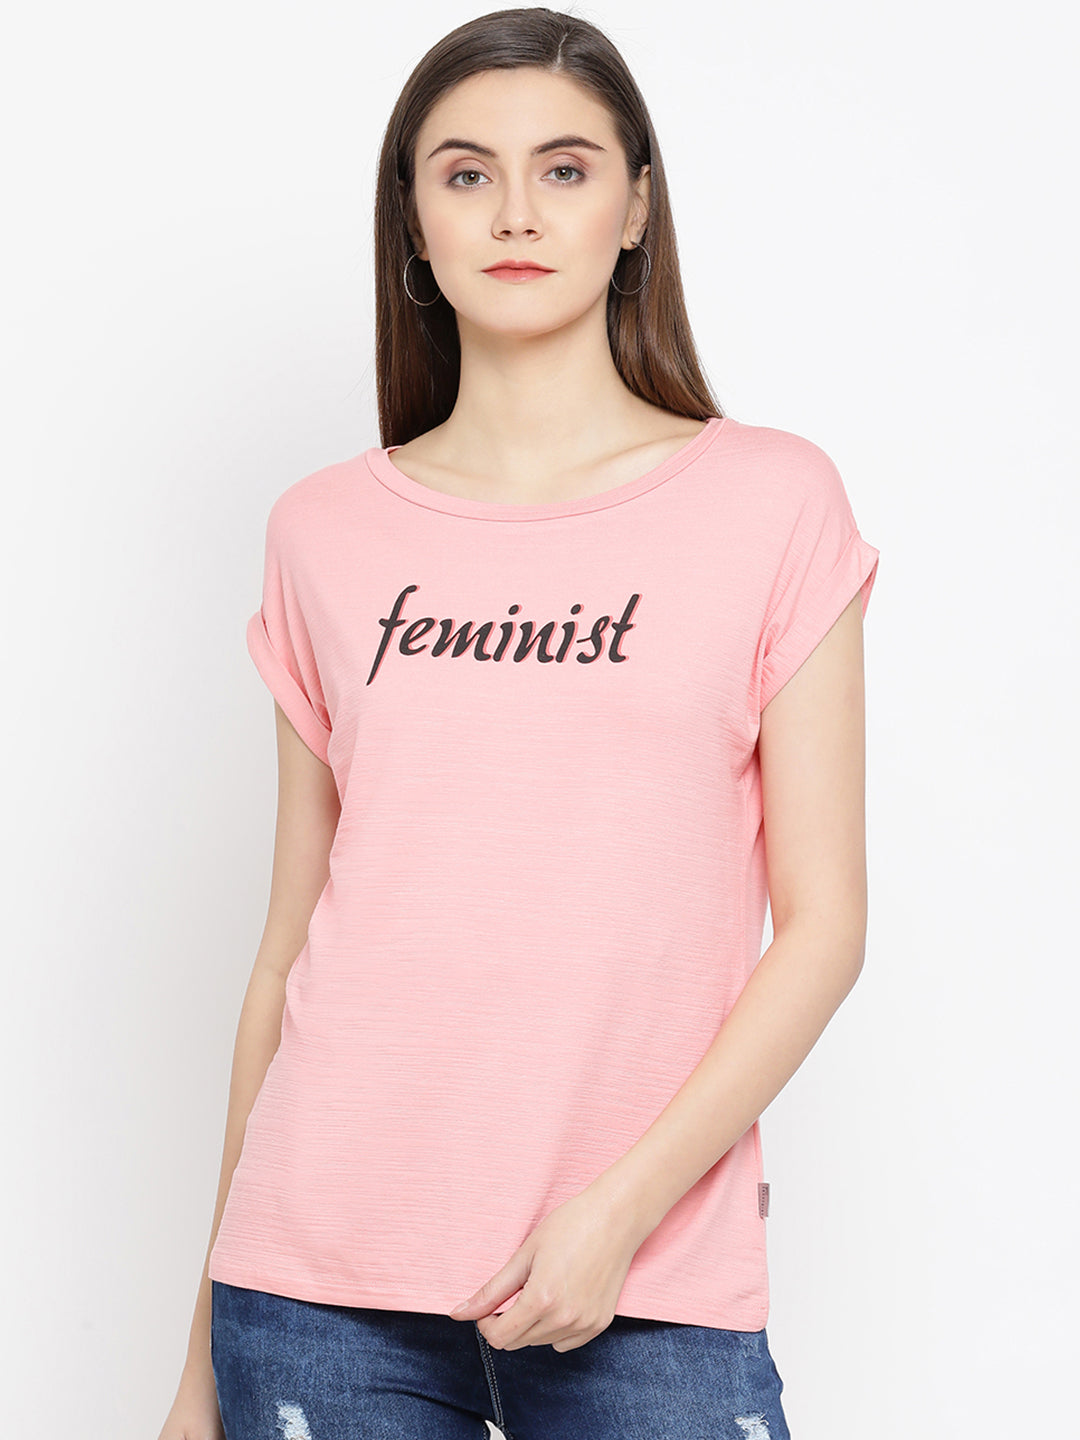 Pink Printed Round Neck T-Shirt - Women T-Shirts